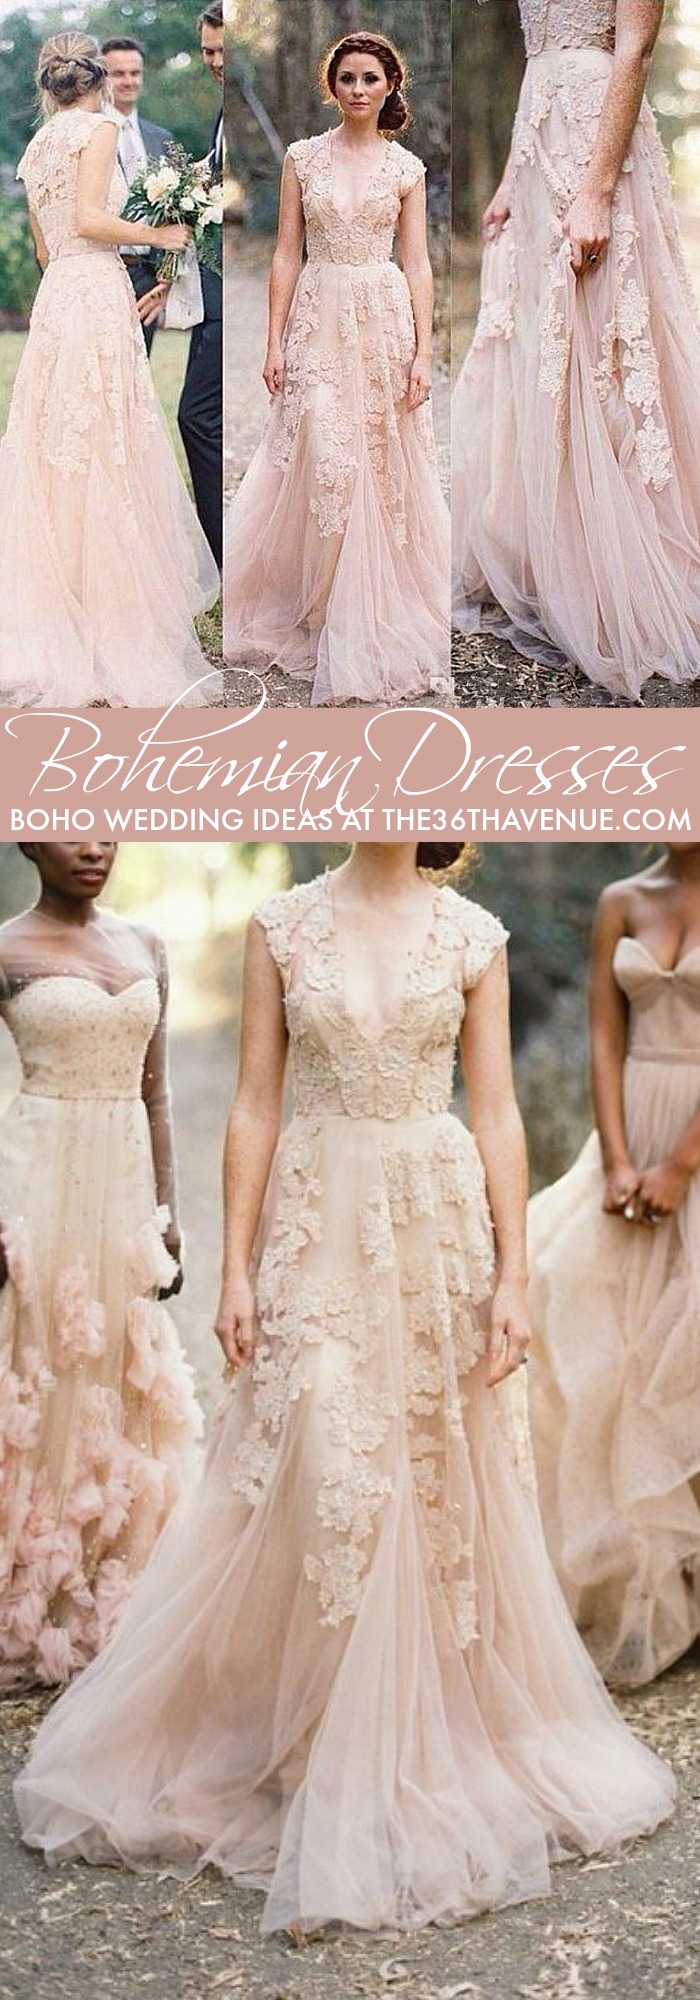 bohemian themed wedding dress